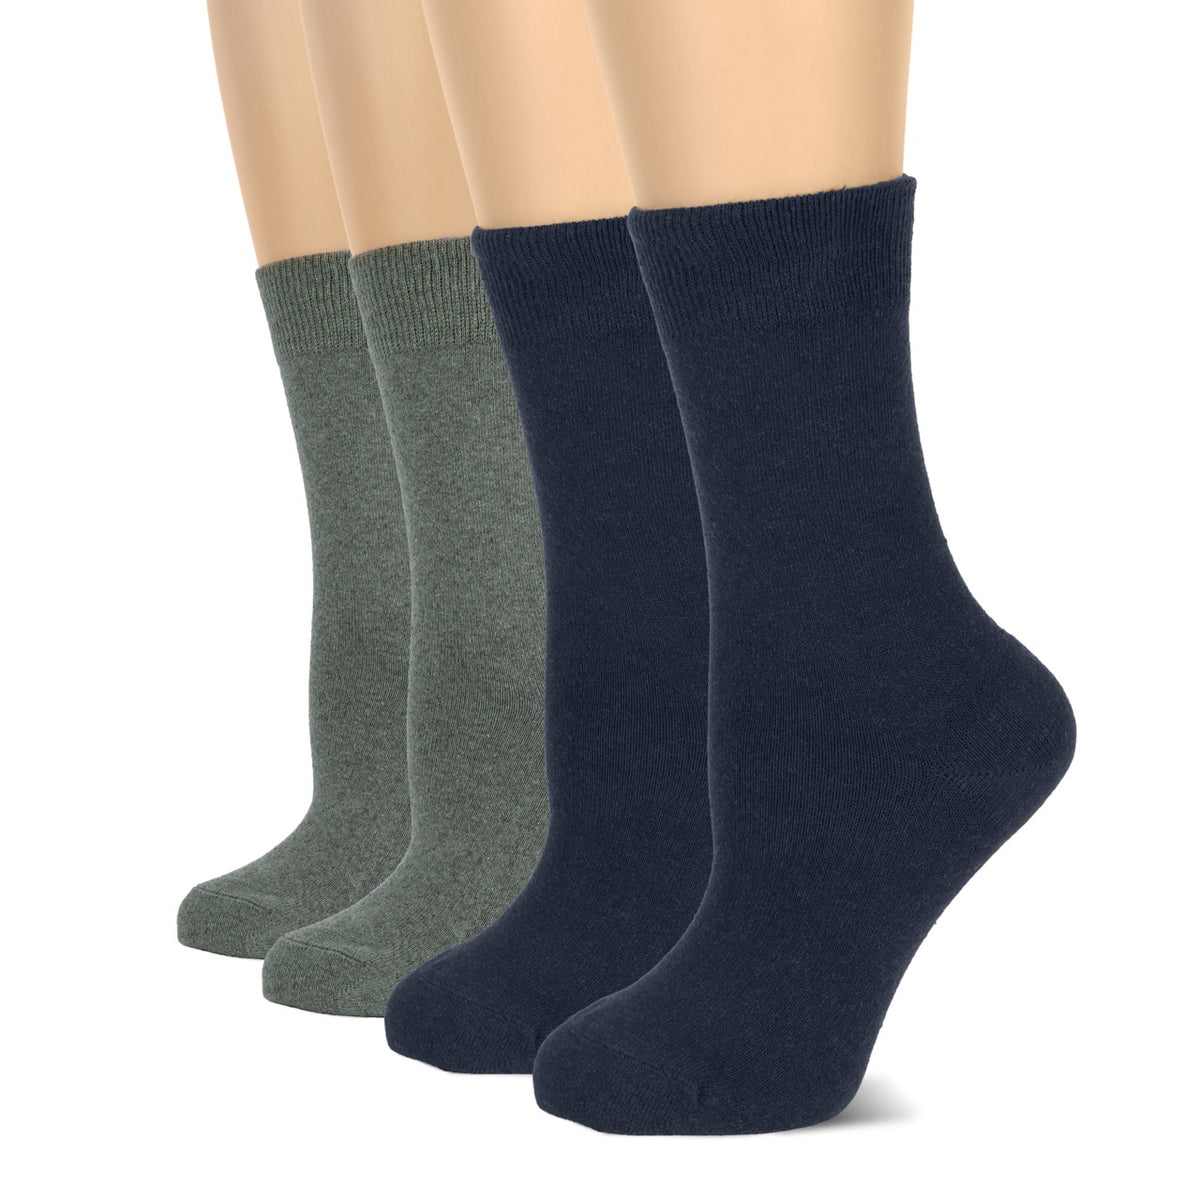 Casual Women's Cotton Dress Crew Socks, 4 Pairs